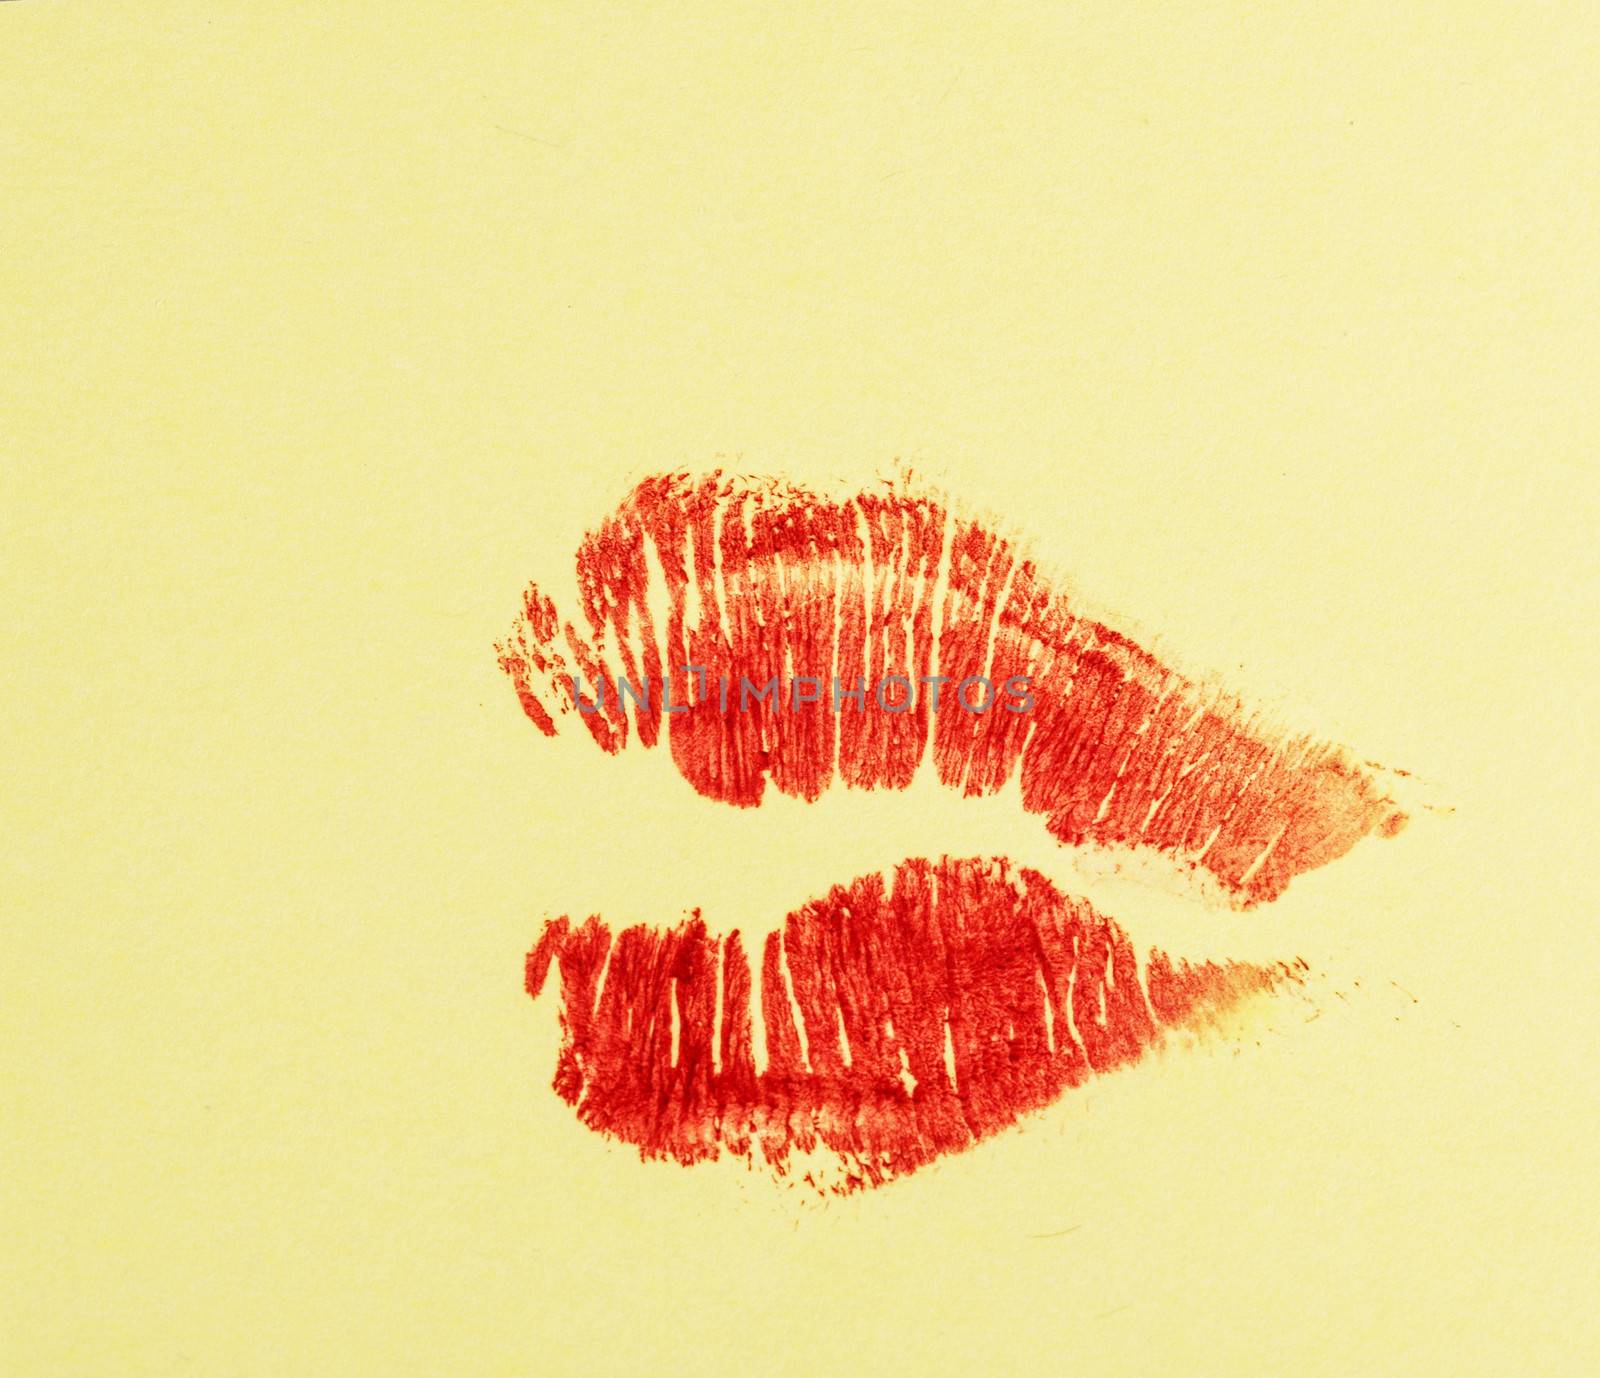 Imprint of lipstick passionate female lips closeup shot